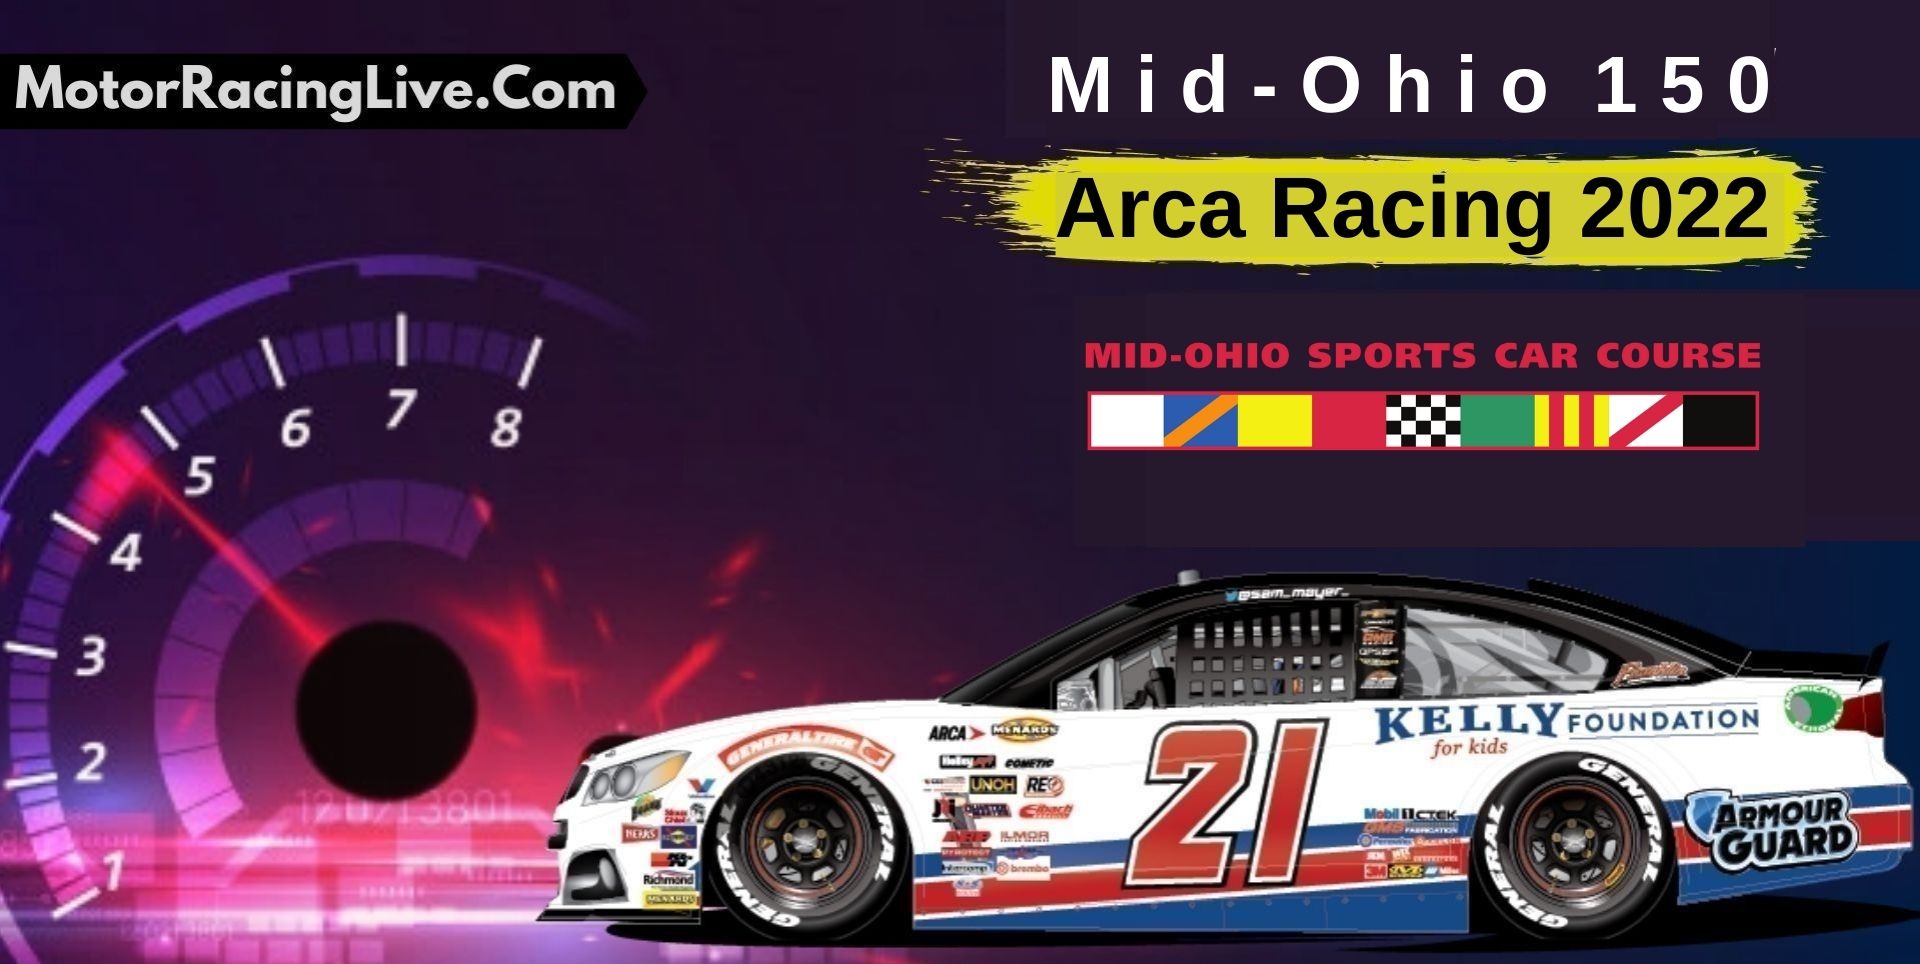 Mid-Ohio 150 ARCA Racing Live Stream 2022 slider